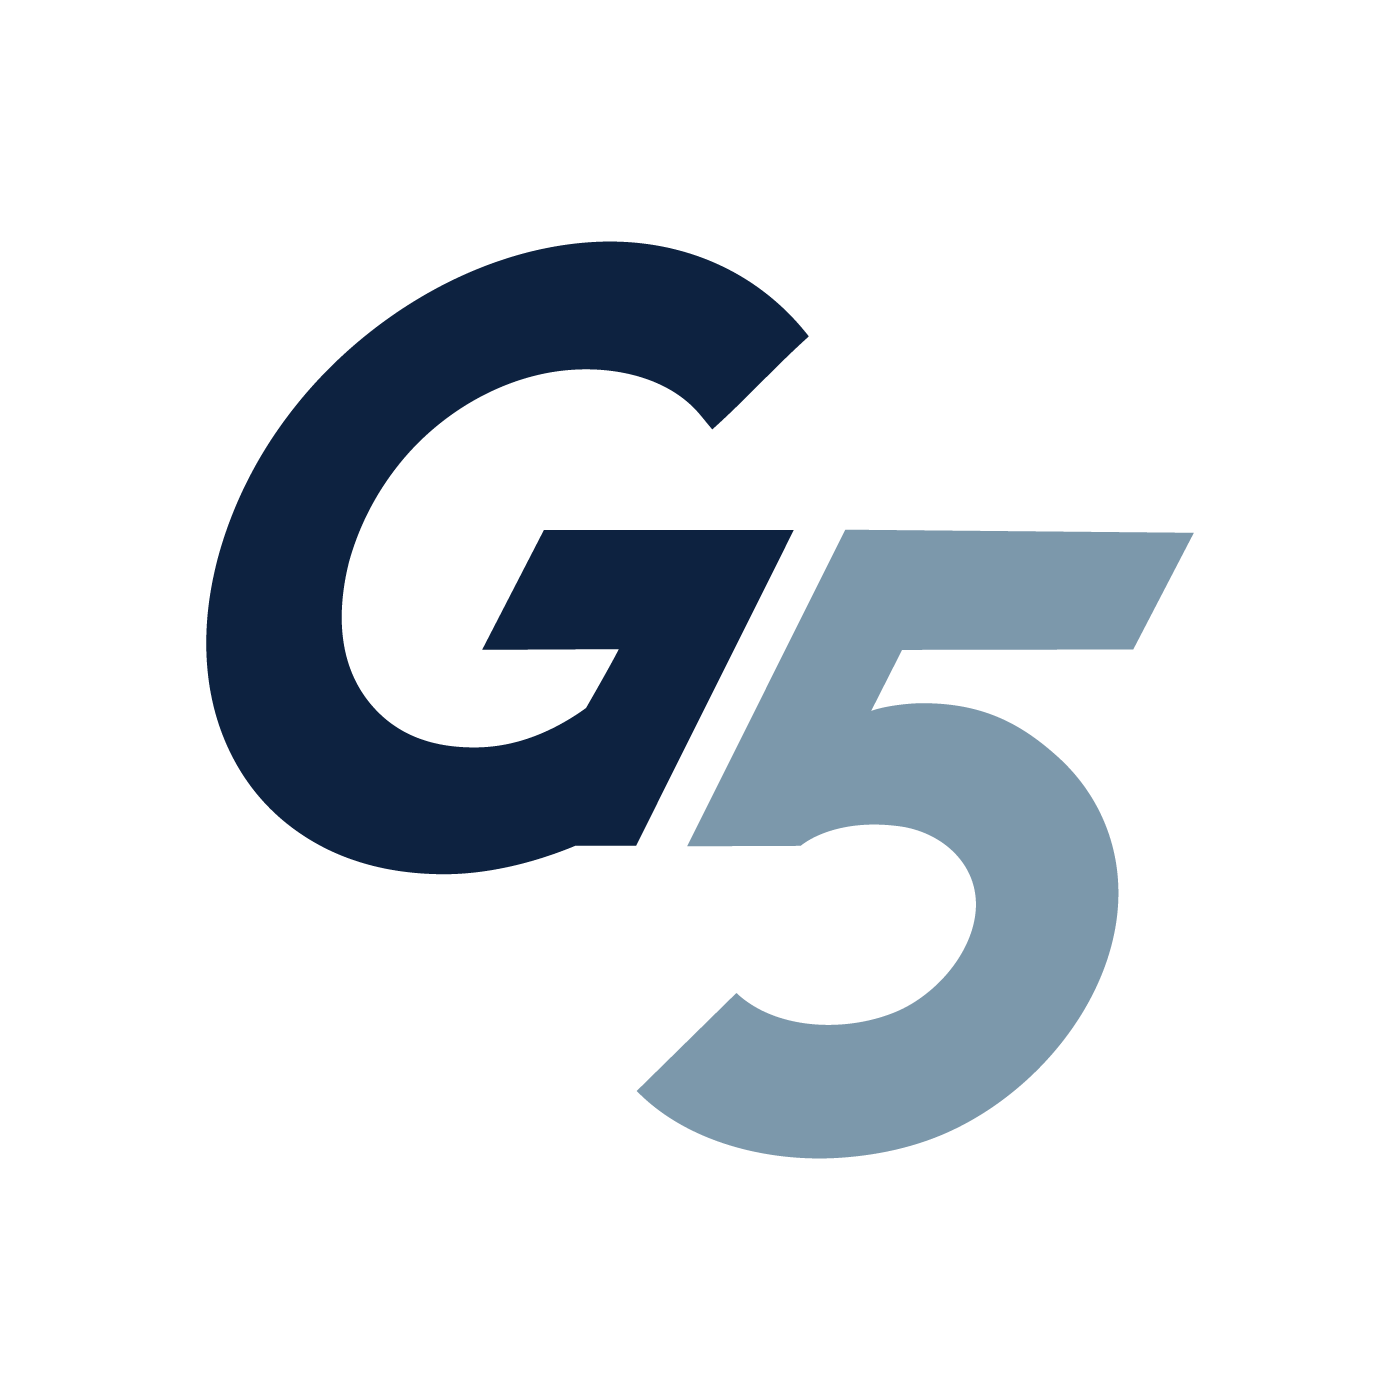 GetG5 Company Logo